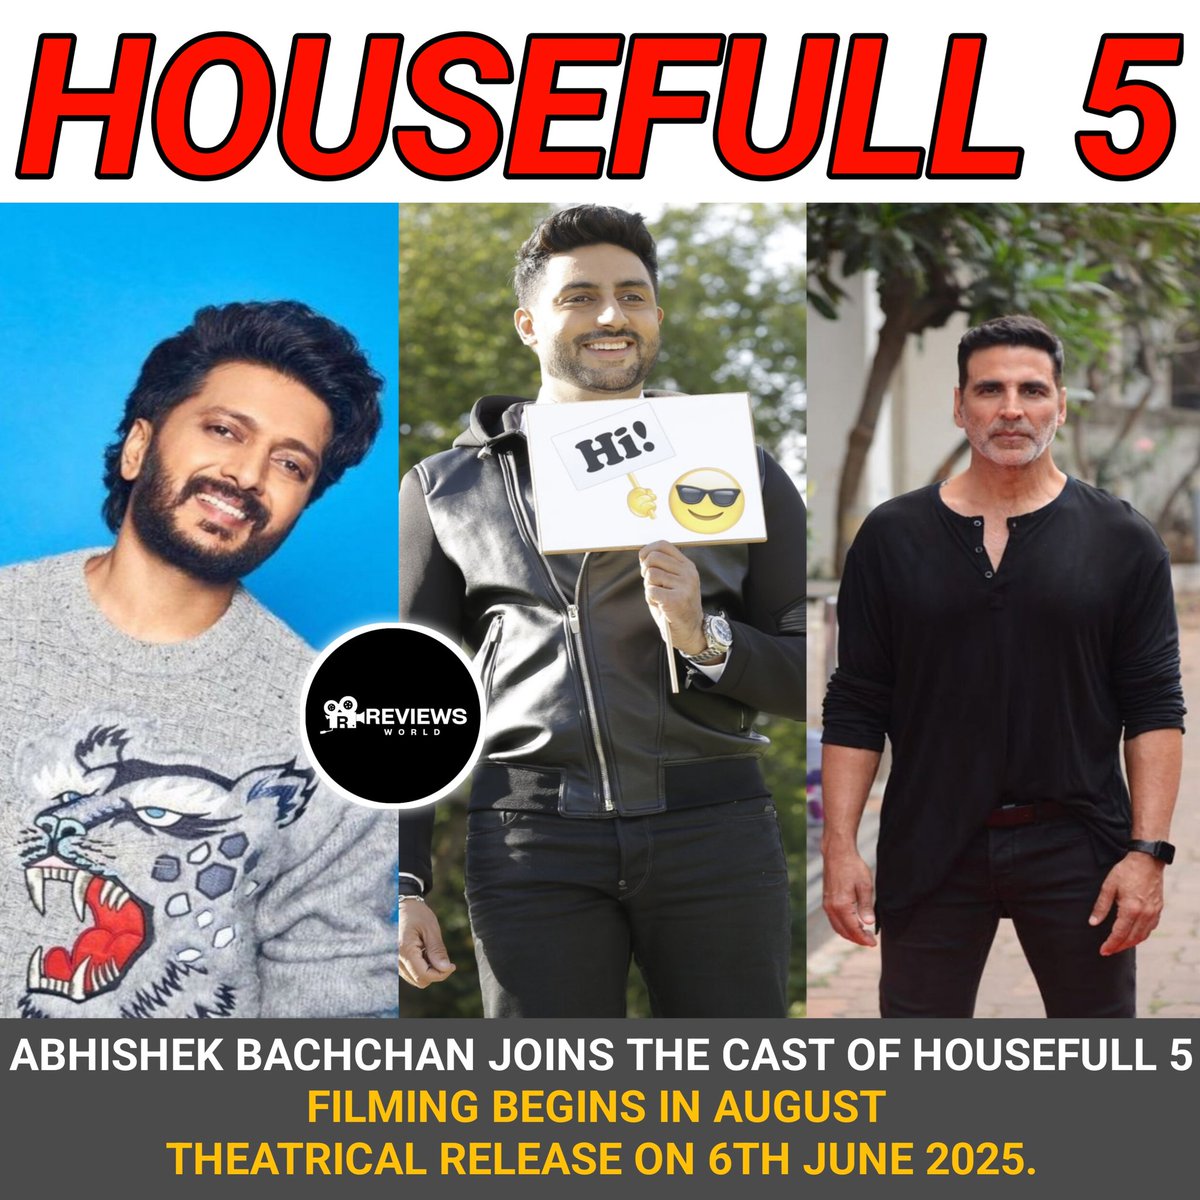 Housefull 5 🥳 

#AkshayKumar #riteshdeshmukh #abhishekbachchan #housefull5 #sajidnadiadwala #Bollywood #comedy #entertainer #movie #film #cinema #explorepage #follow #reviewsworld